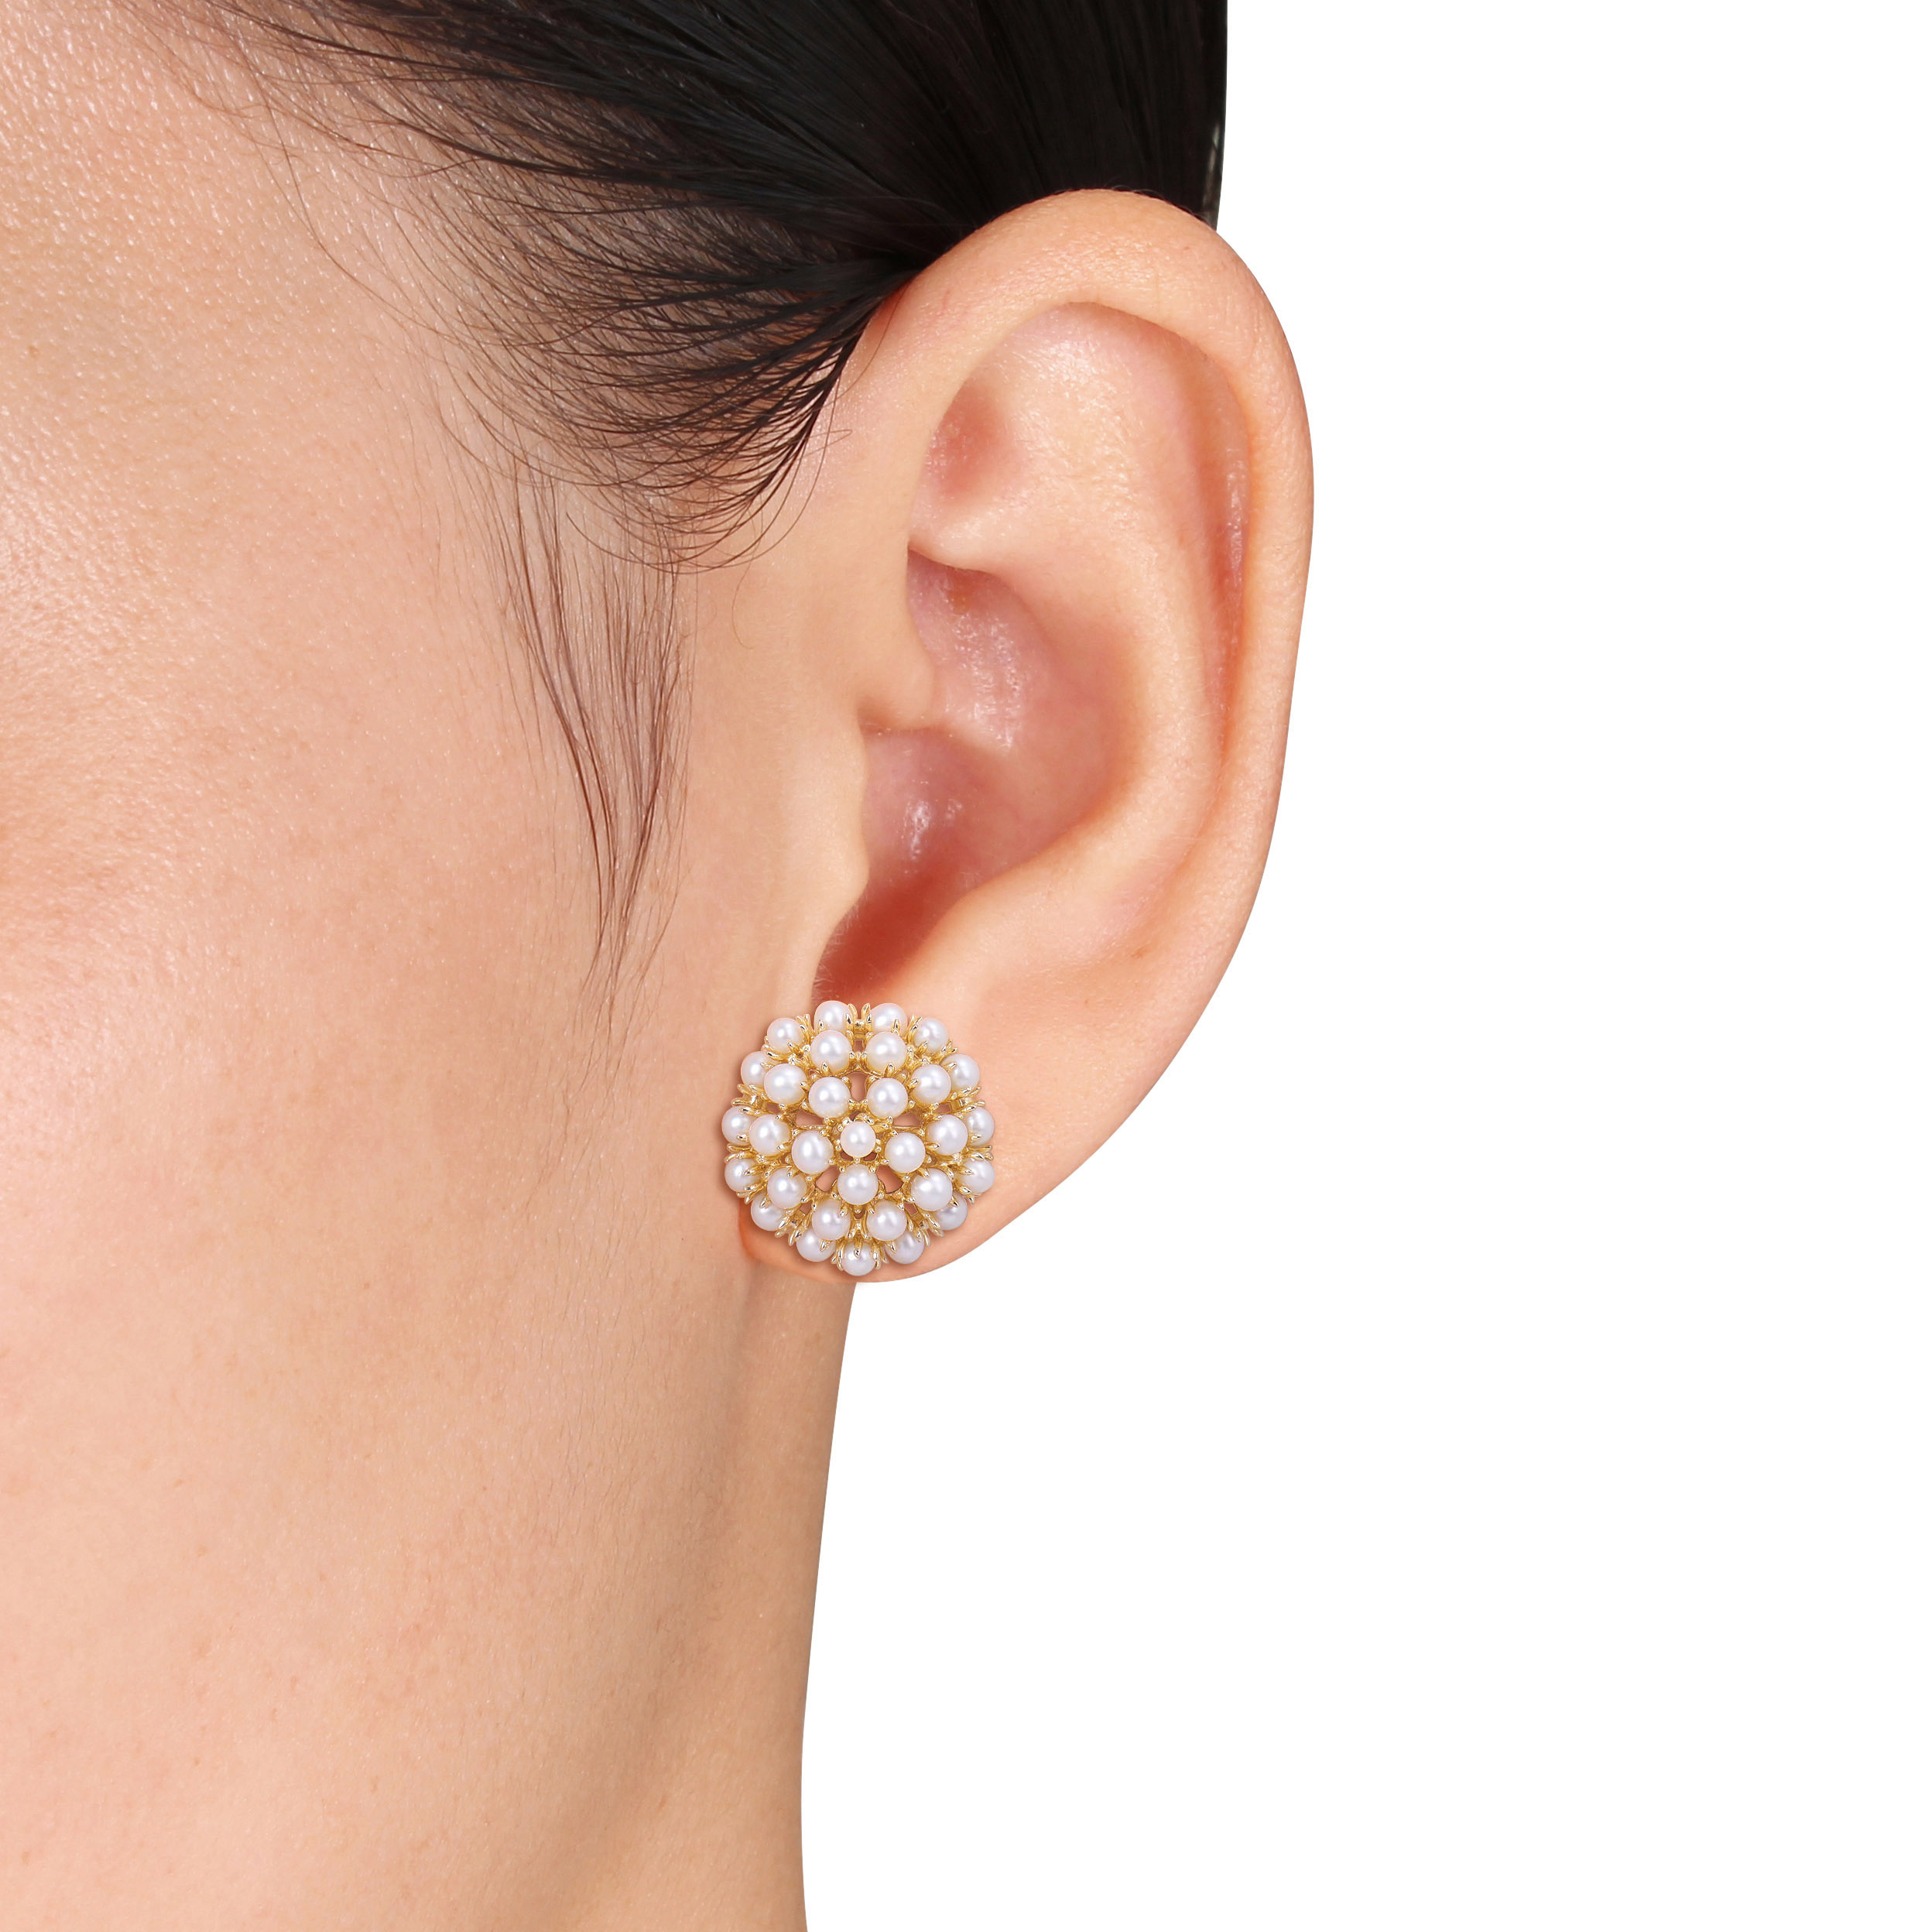 2.5 - 3 MM Cultured Freshwater Pearl Stud Earrings in 10k Yellow Gold